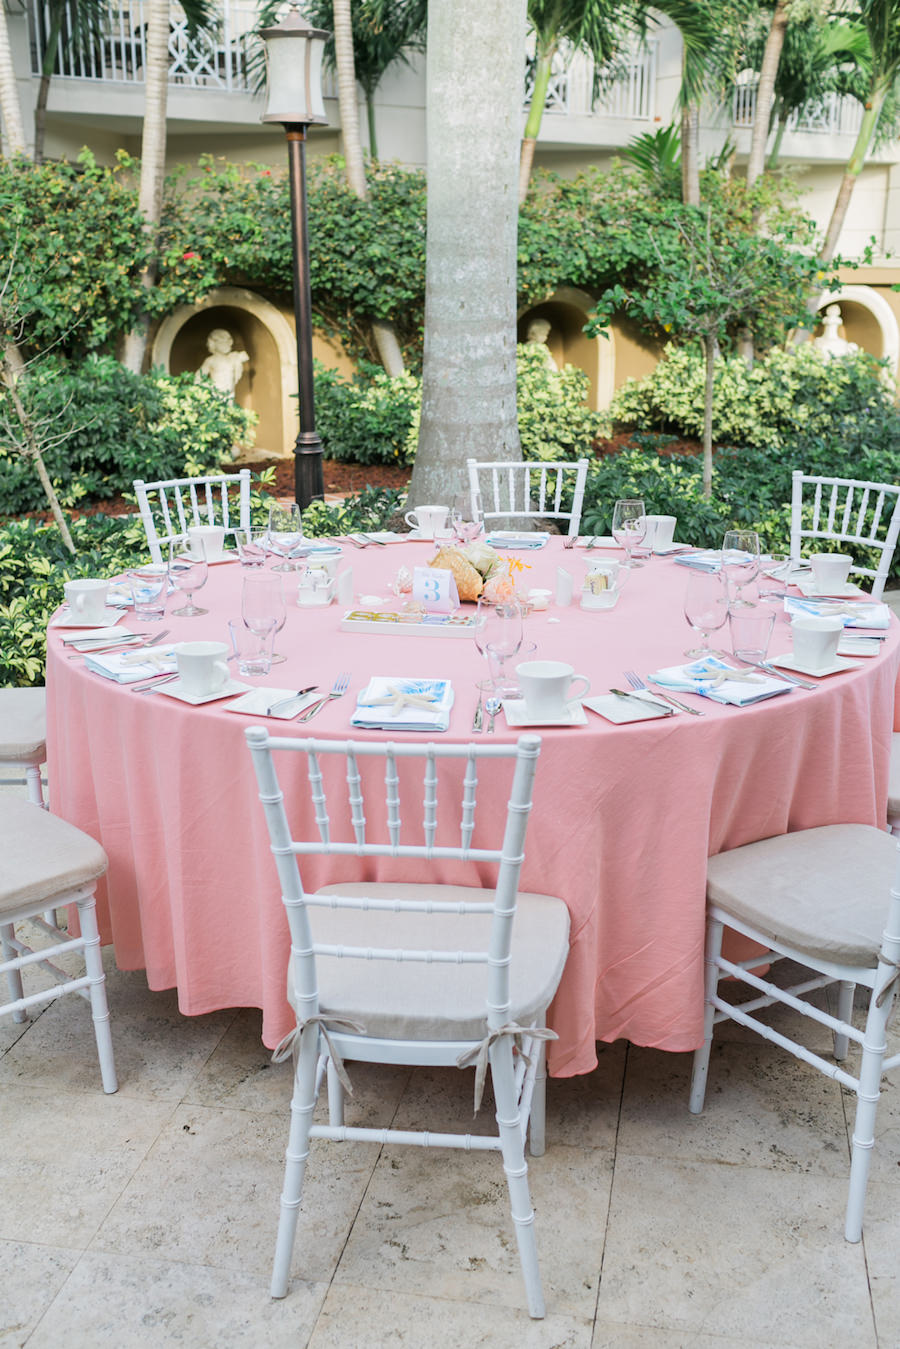 White and Pink Wedding Reception Inspiration with White Chiavari Chairs | Travelmoons: Sandals Royal Bahamian Bahamas Destination Honeymoon and Wedding | Wedding Photographer AlexisJuneWeddings